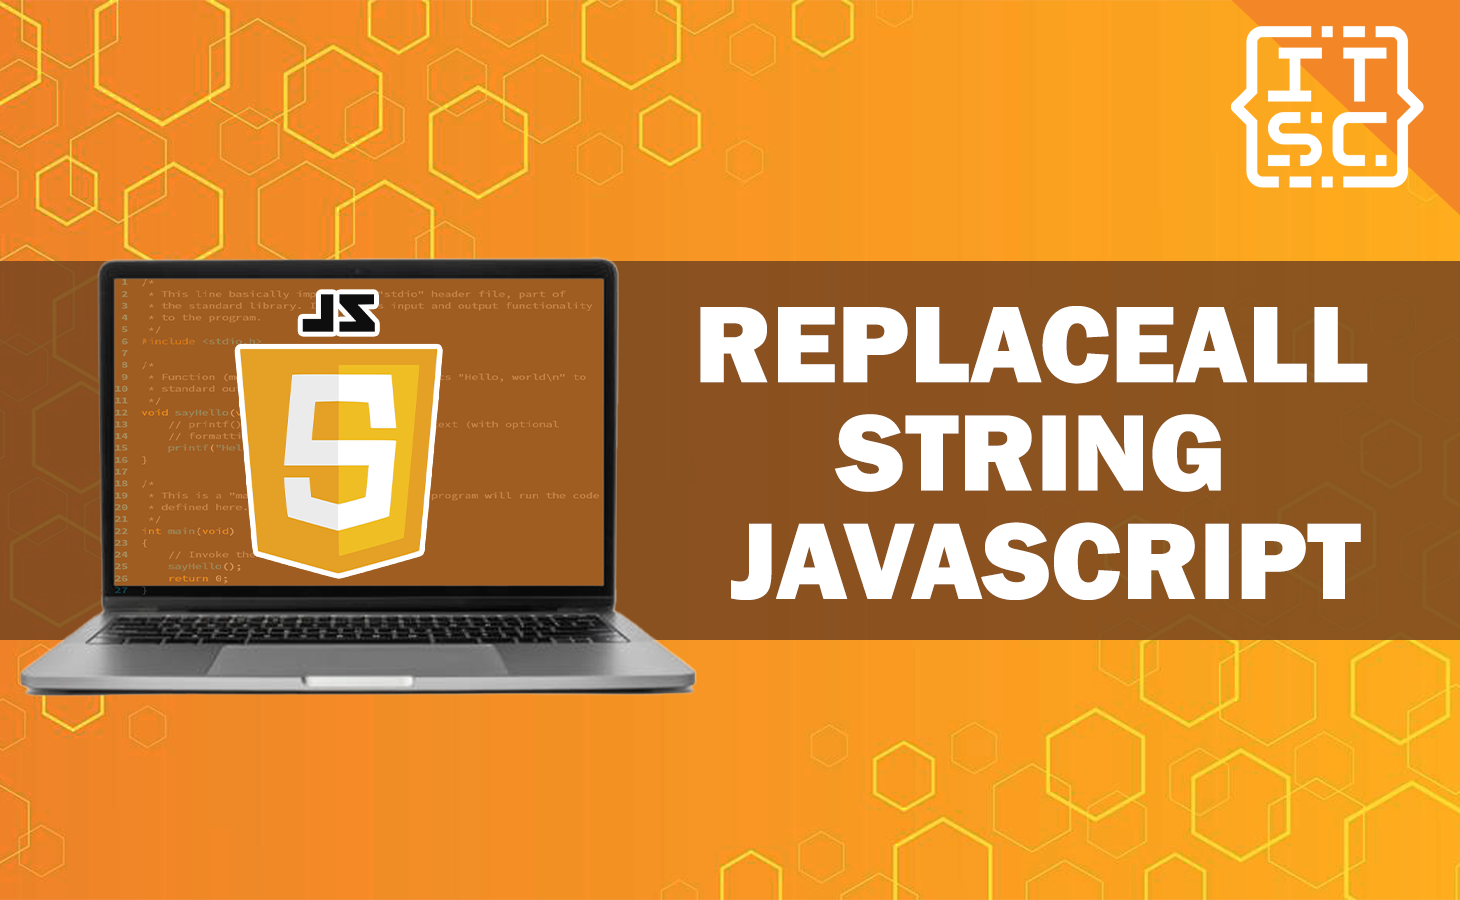 replaceall string javascript